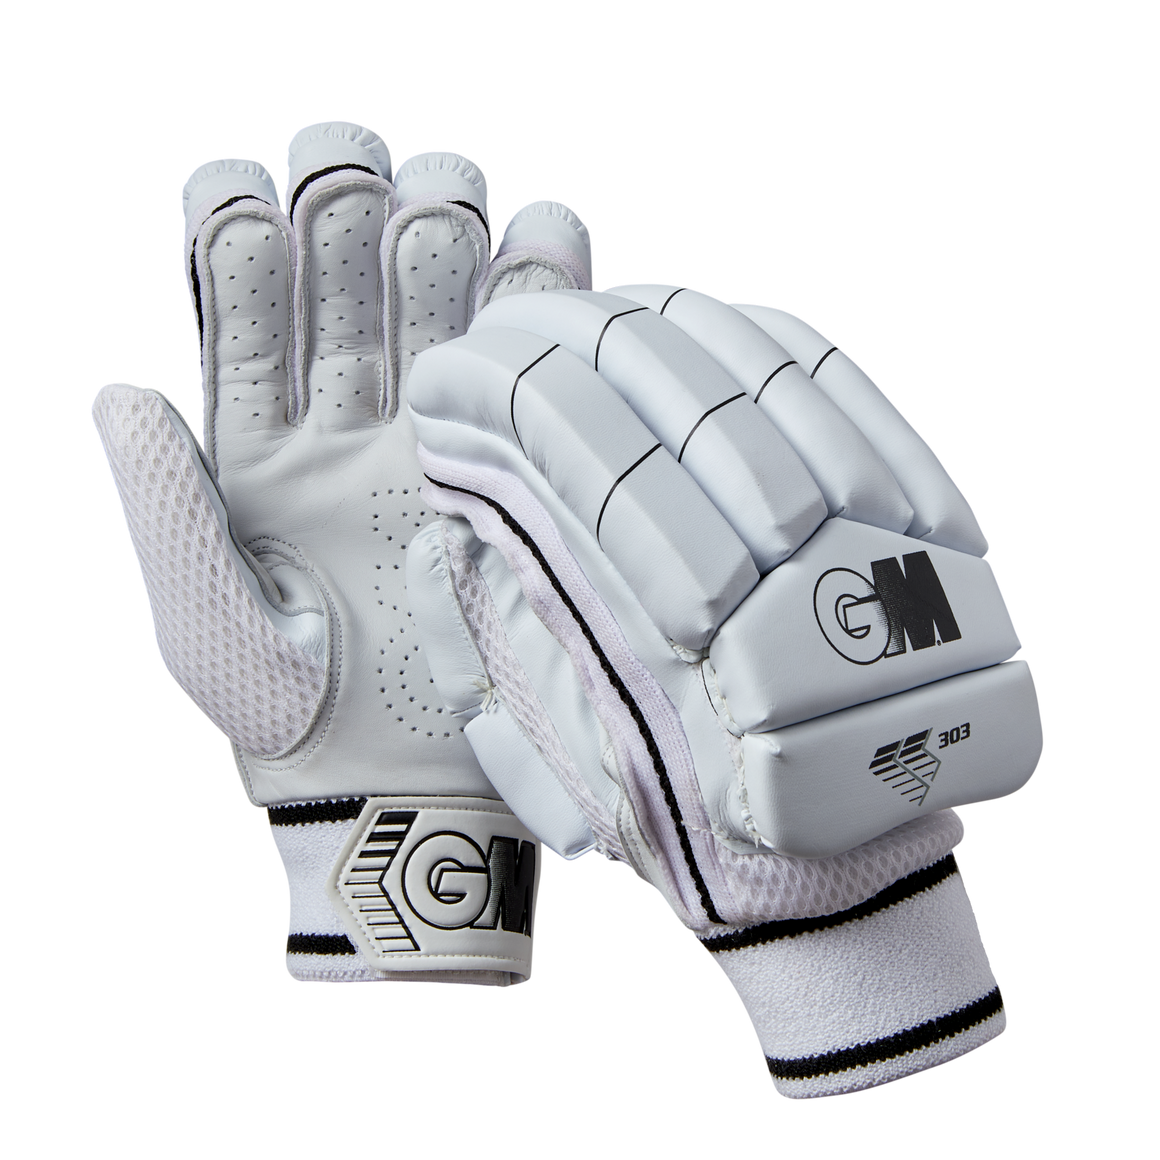 GM 303 Junior Batting Gloves